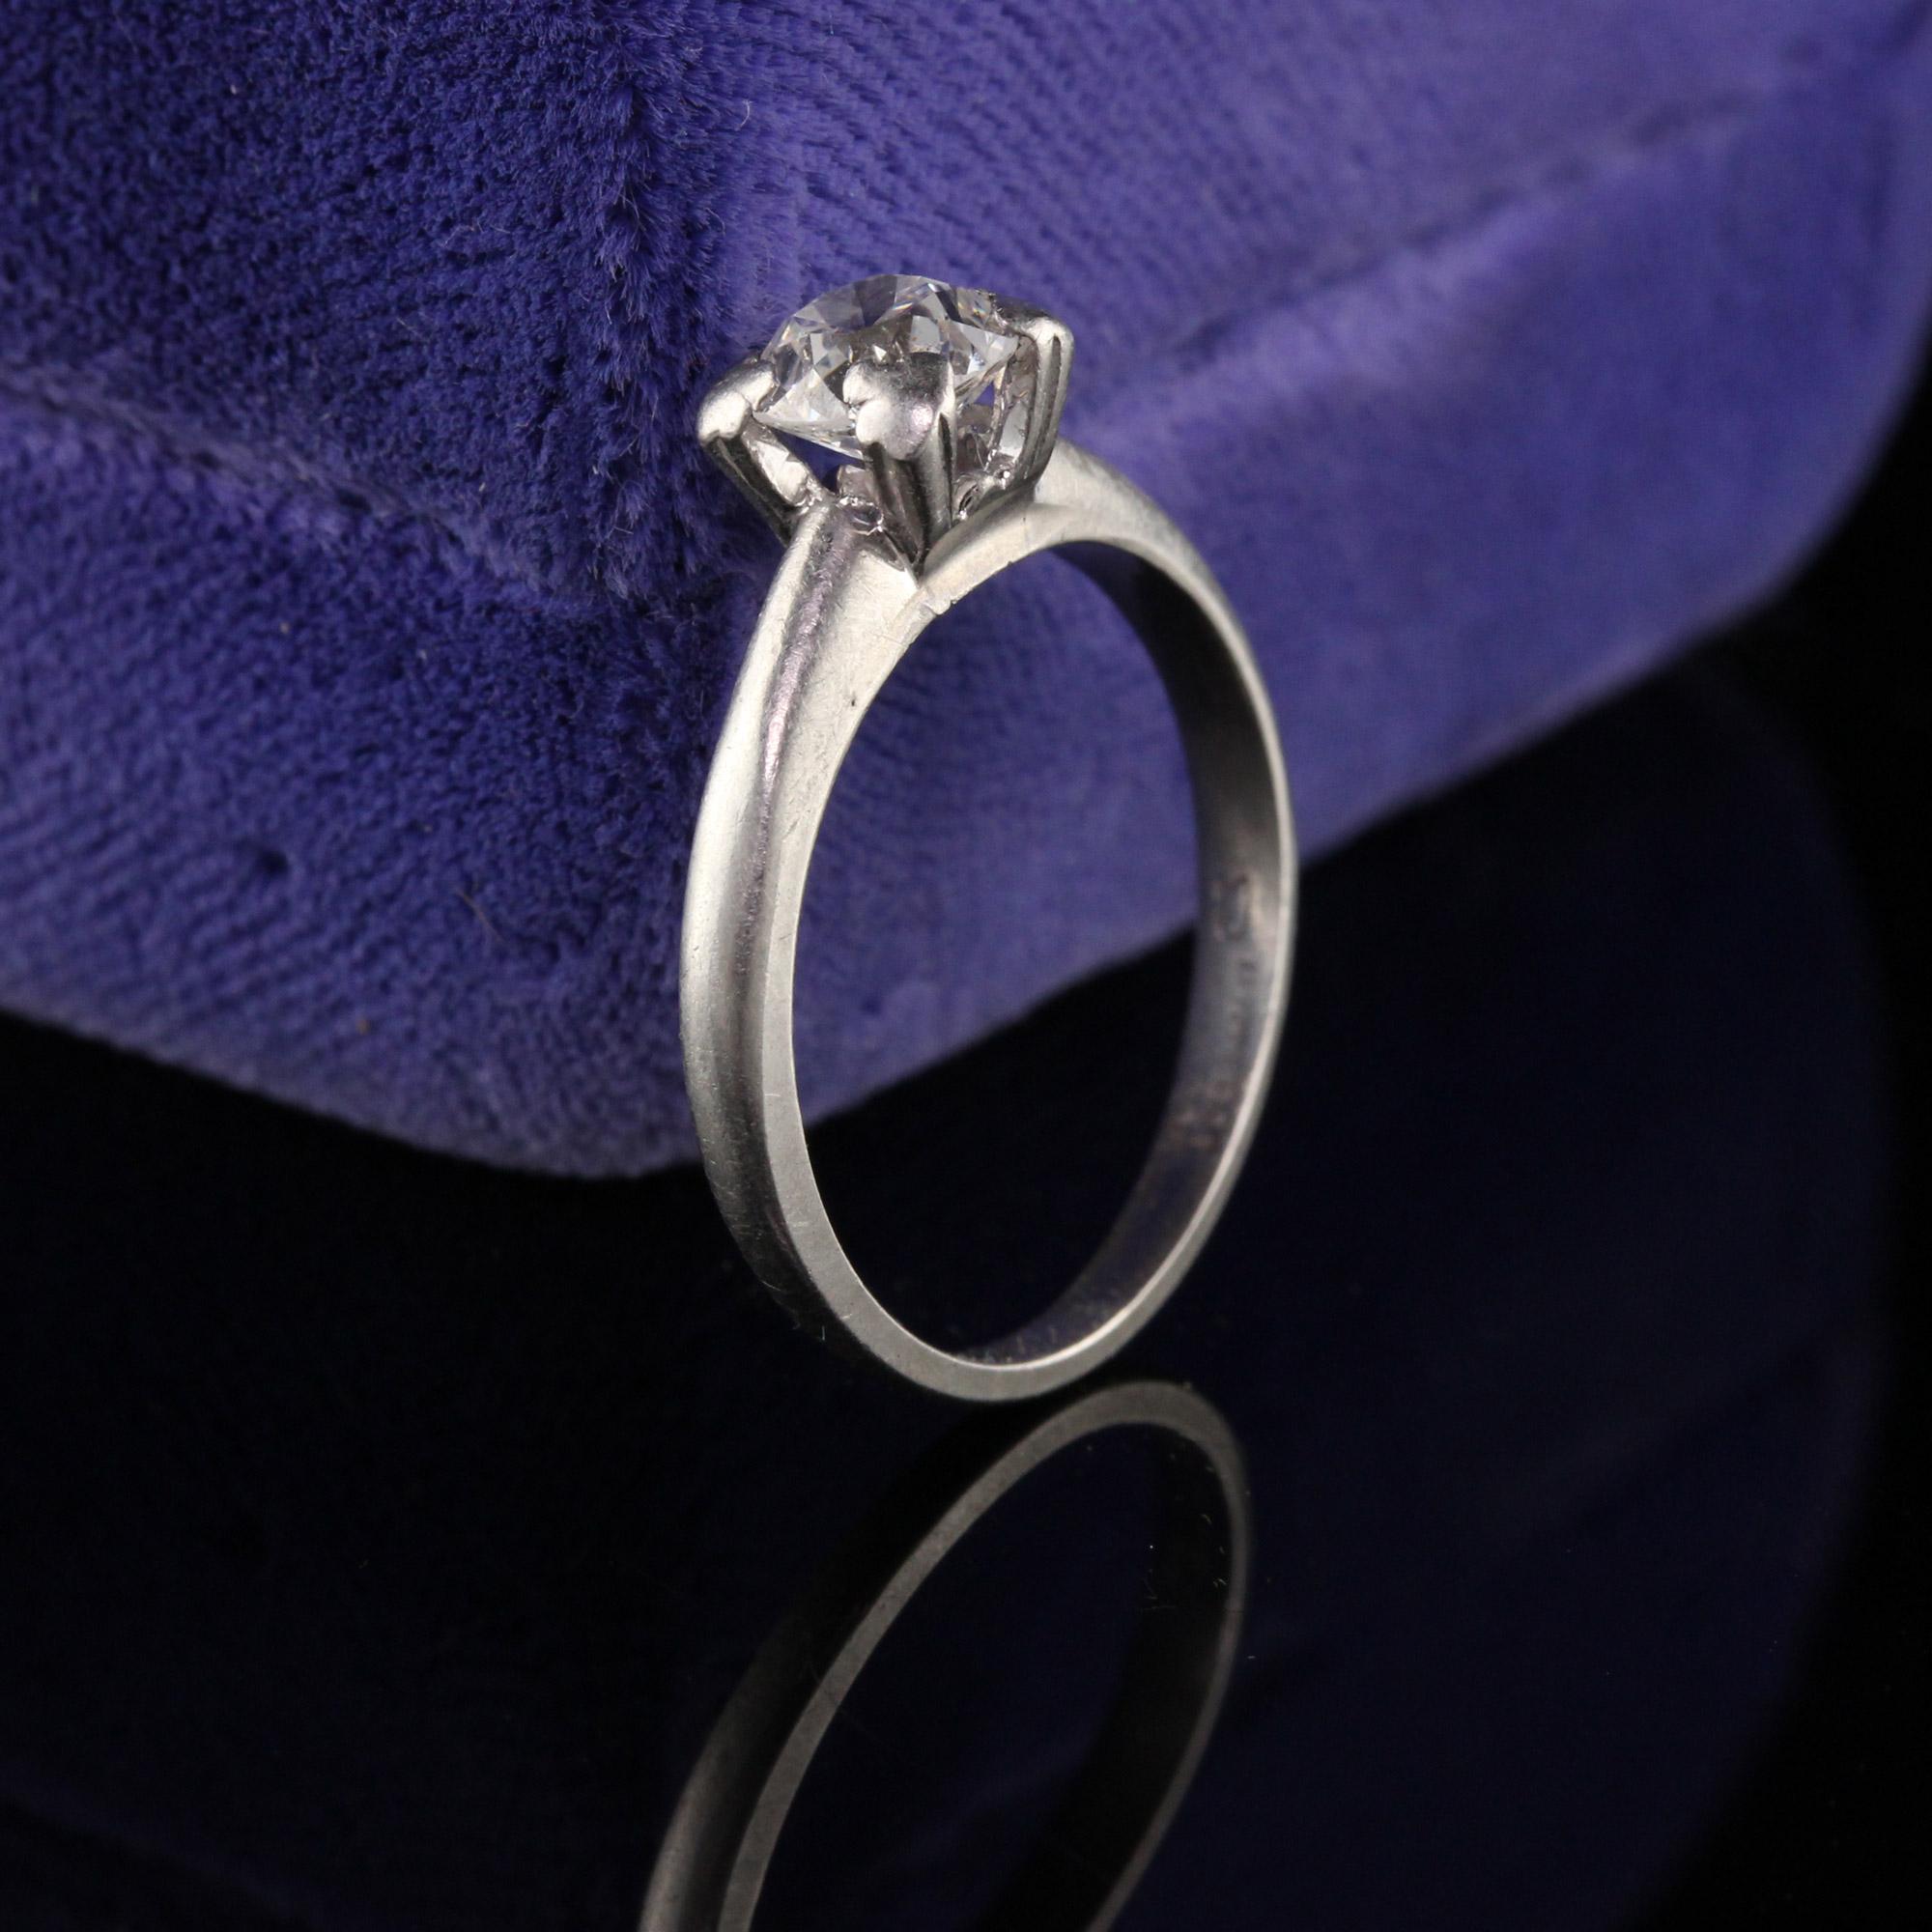 Beautiful Antique Art Deco Platinum Old European Diamond Engagement Ring. This classic engagement ring has an old european cut diamond set in the center of a timeless art deco platinum four prong mounting.

Item #R0768

Metal: Platinum

Diamond: